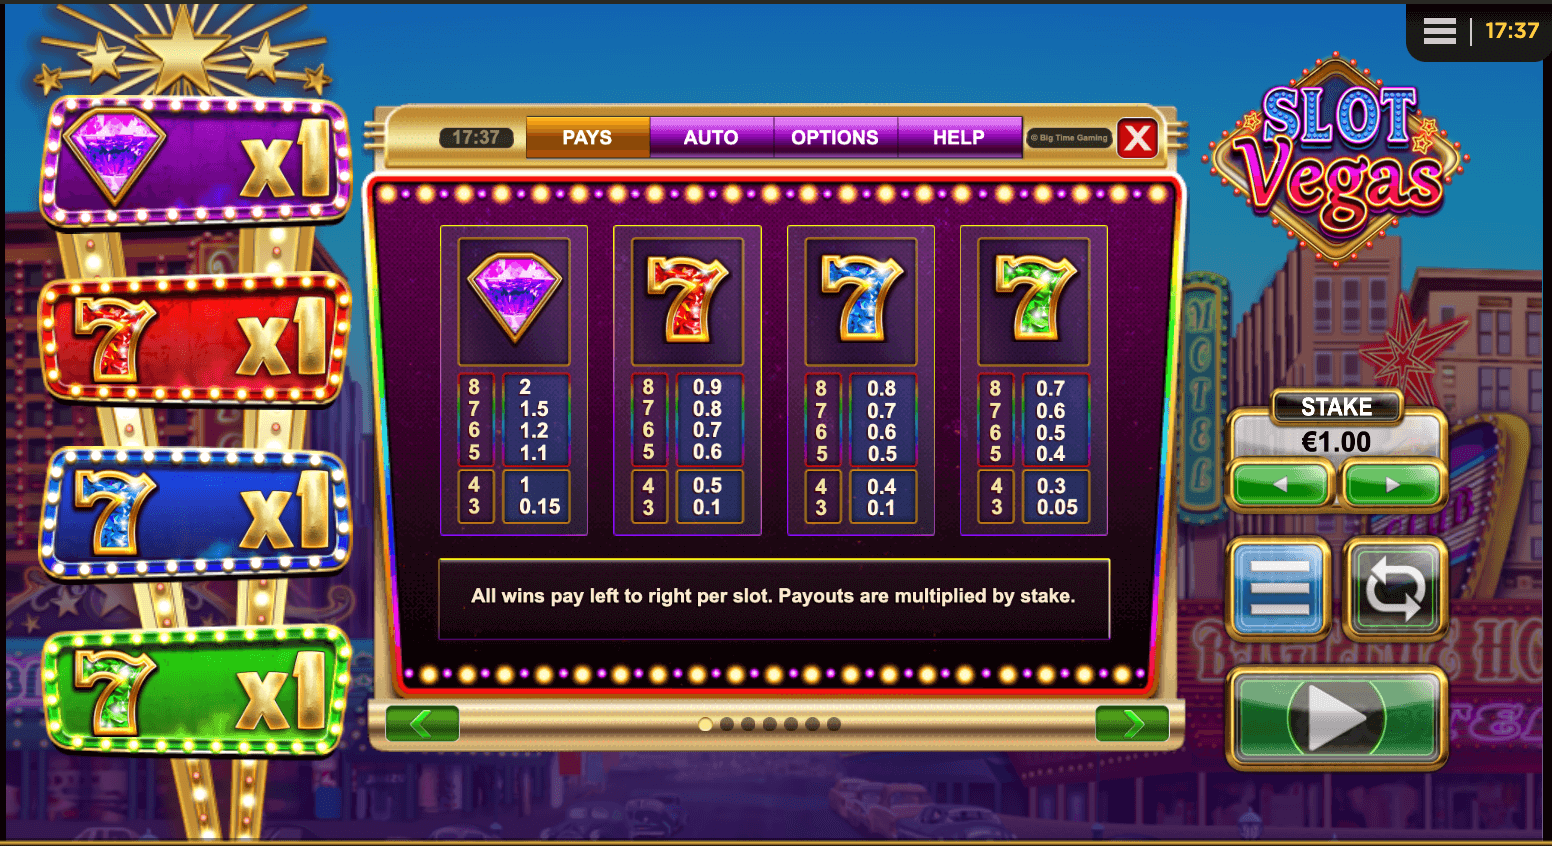 Slot Vegas Megaquads Spel proces